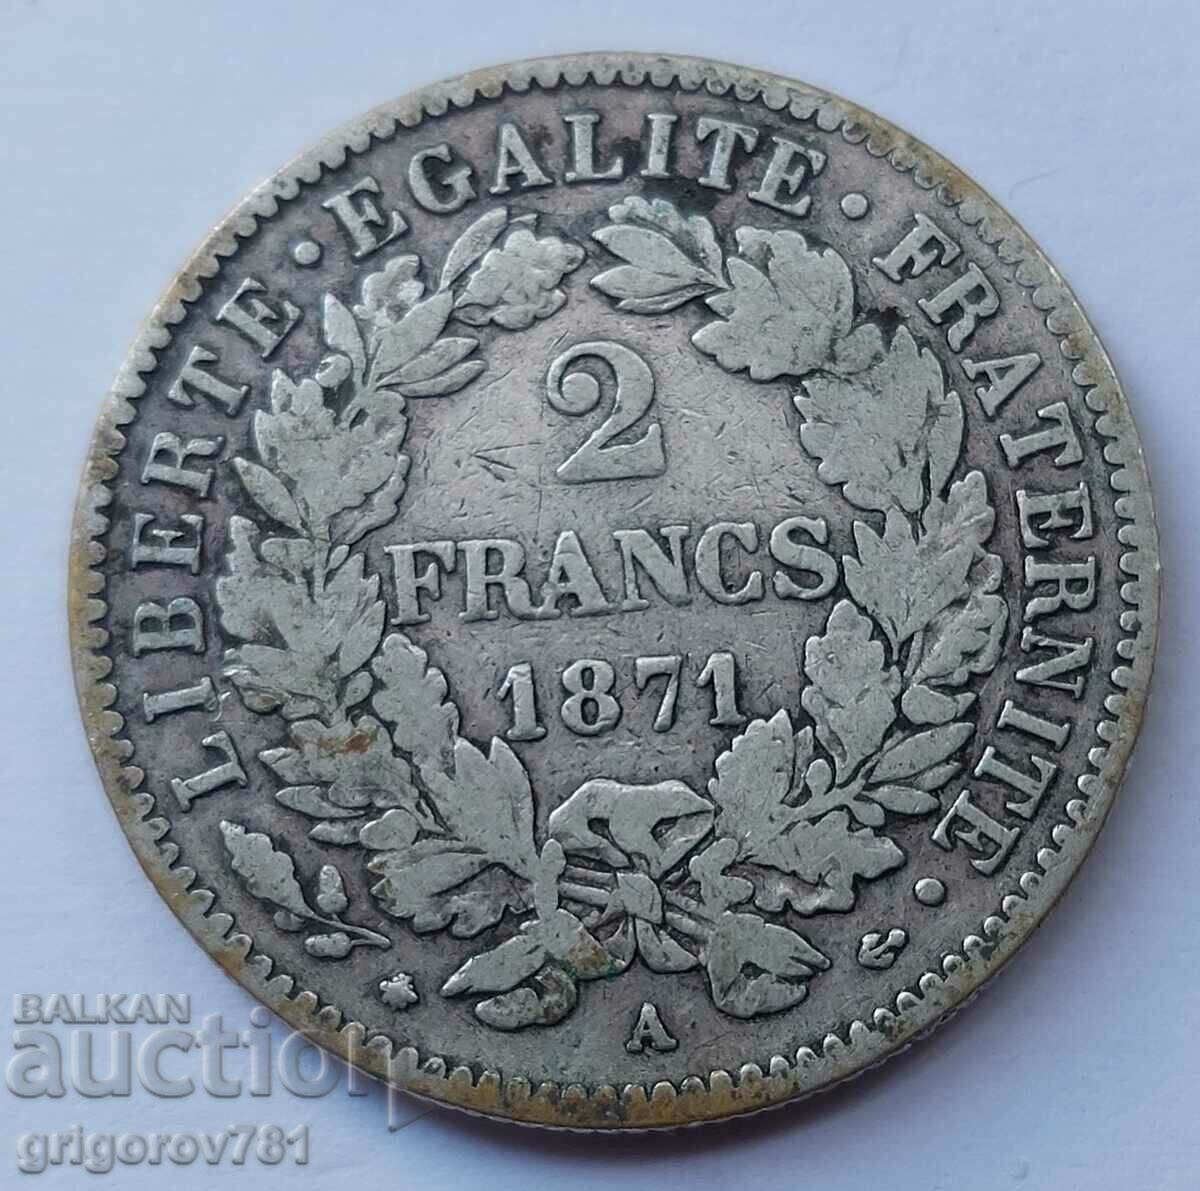 2 francs silver France 1871 A - silver coin №31